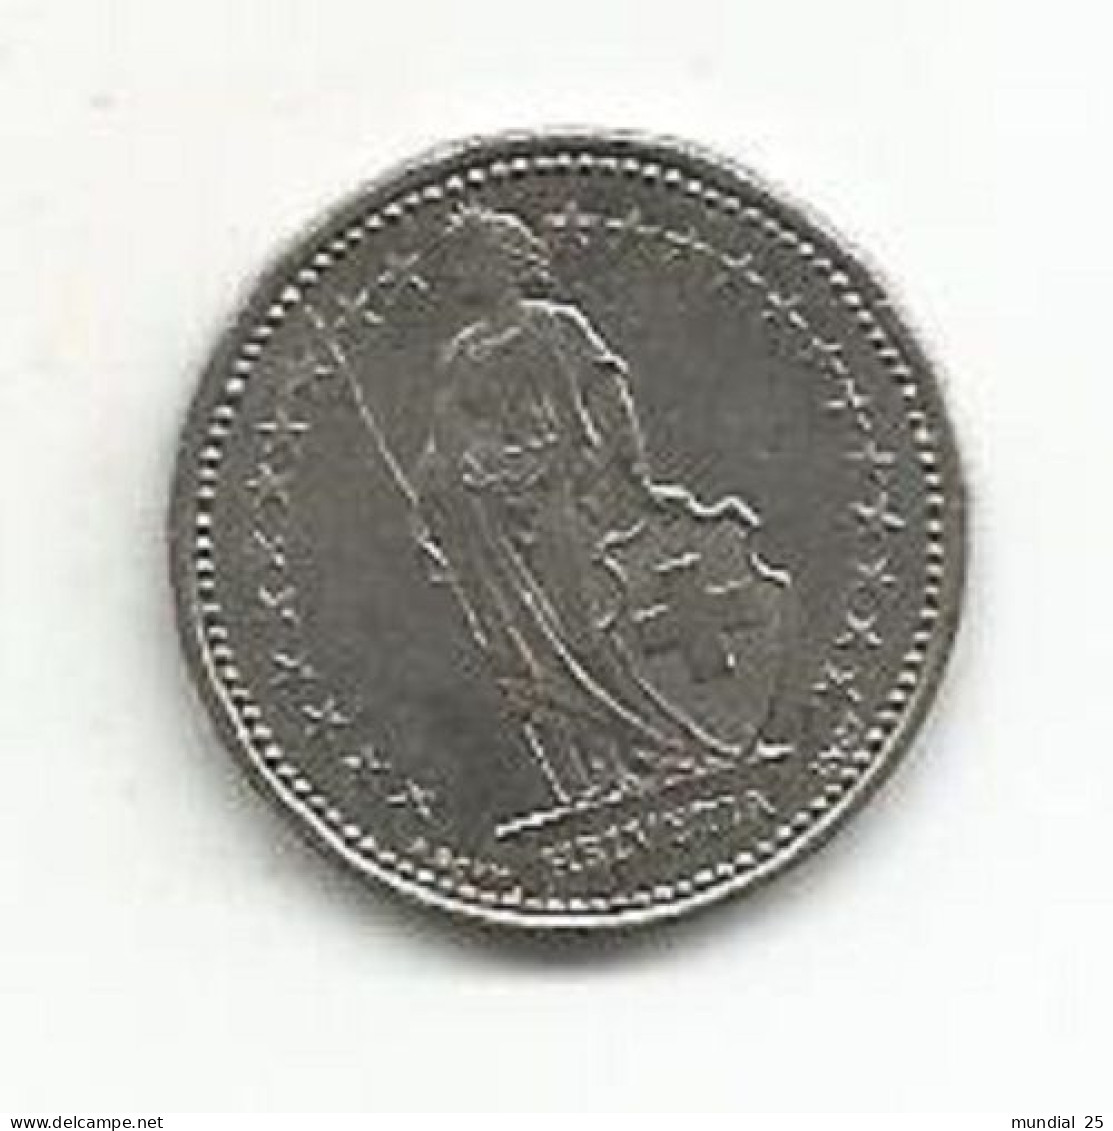 SWITZERLAND 1/2 FRANC 1984 - 1/2 Franc